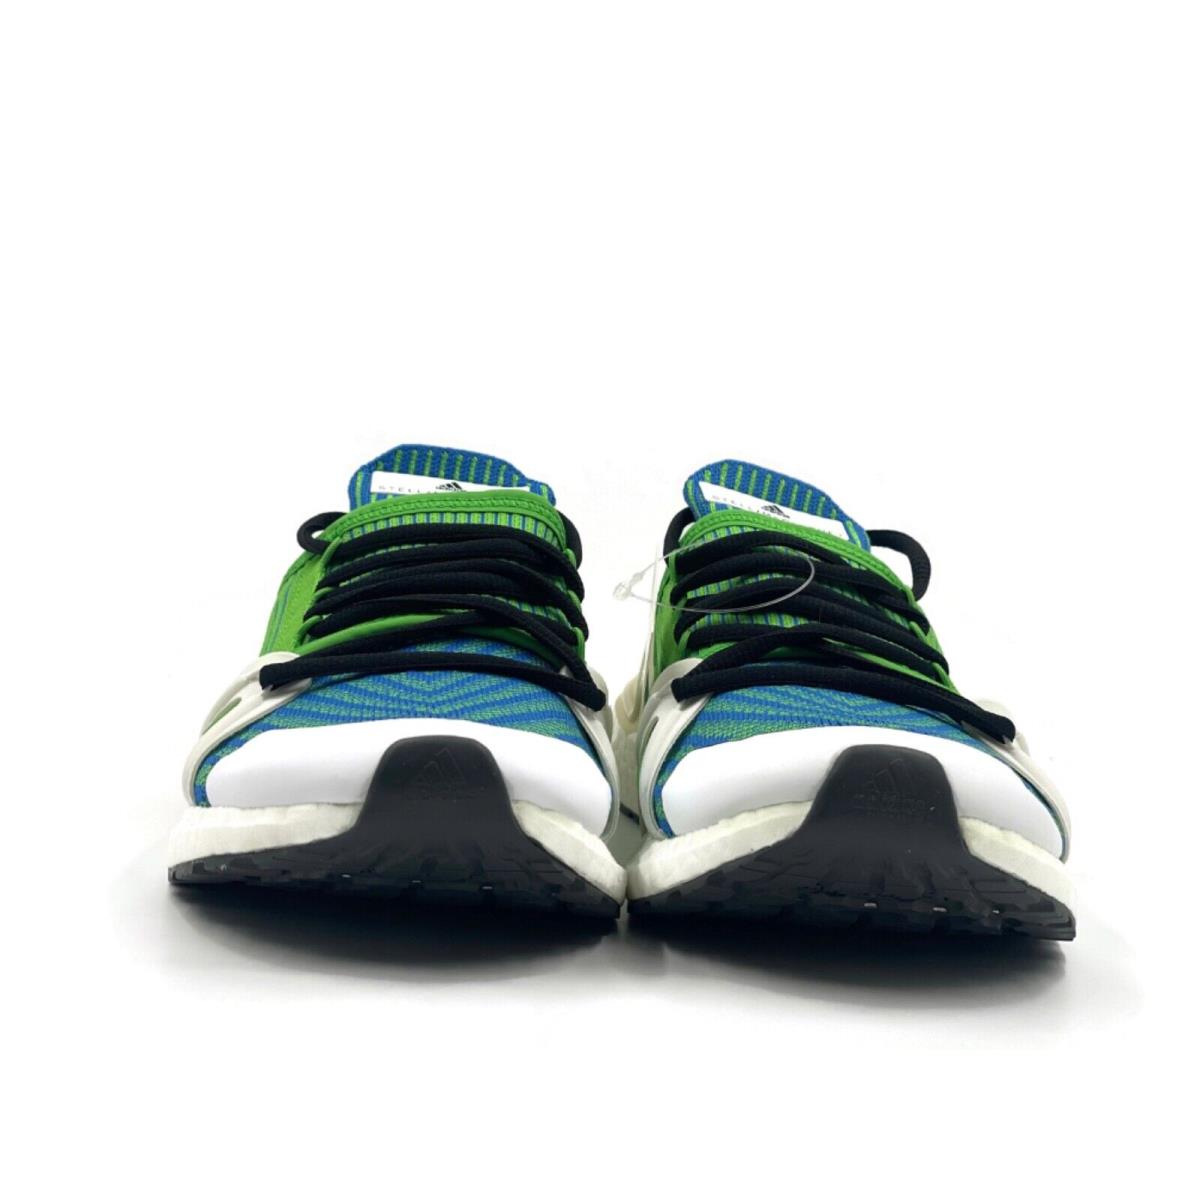 Adidas shoes  - White Green Blue Black 7